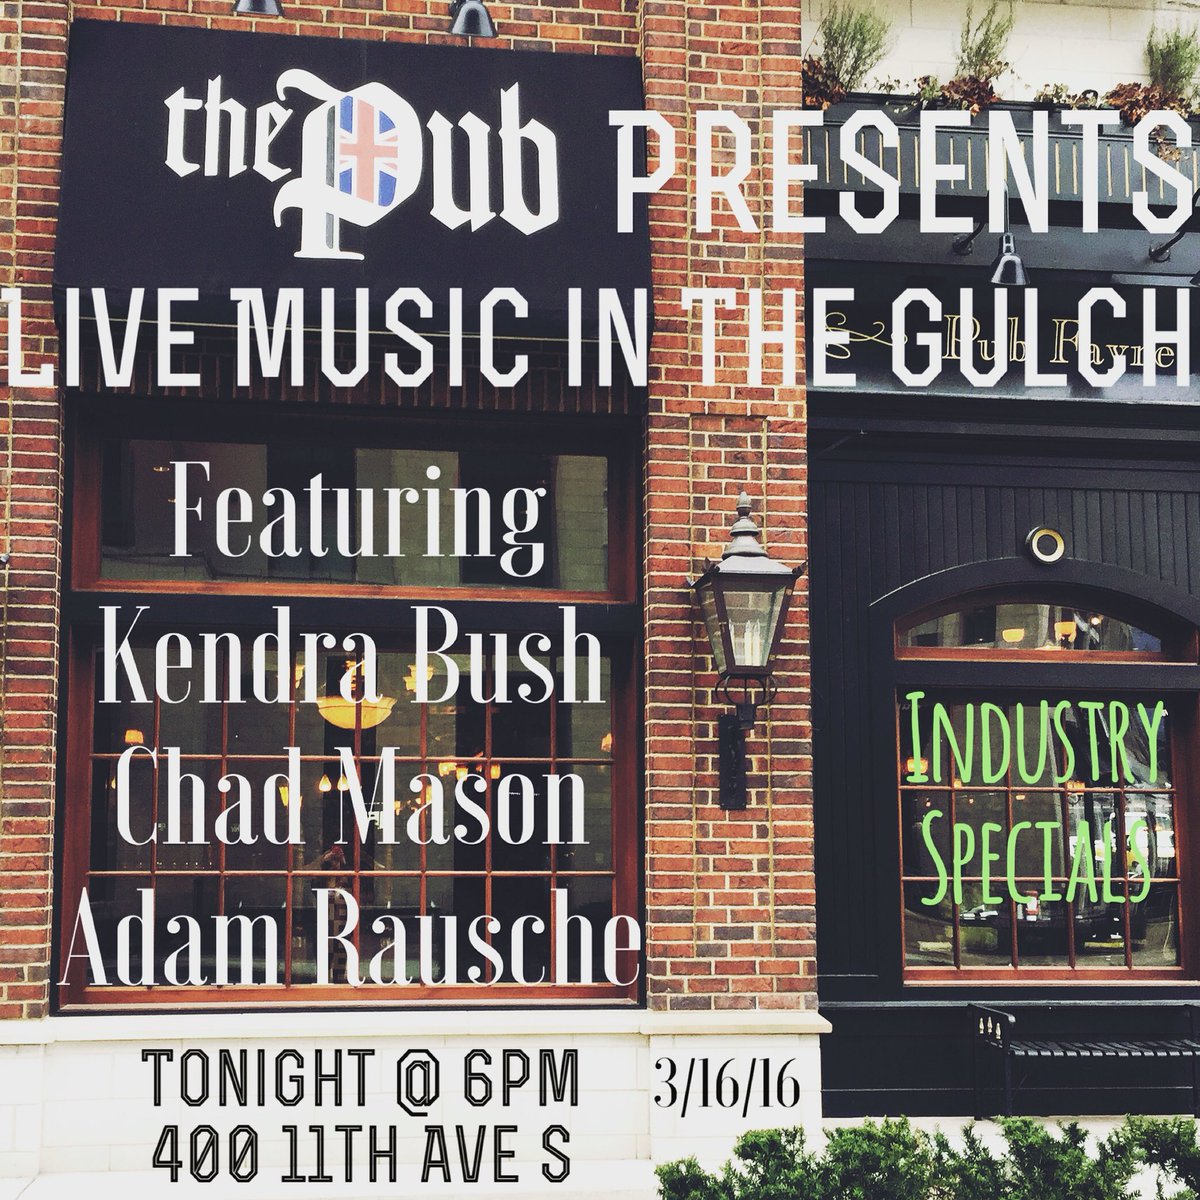 @PubNashville Tonight's lineup is a good one. #ThePubNashvillePresentsLiveMusicInTheGulch #ThePubNashville #TheGulch